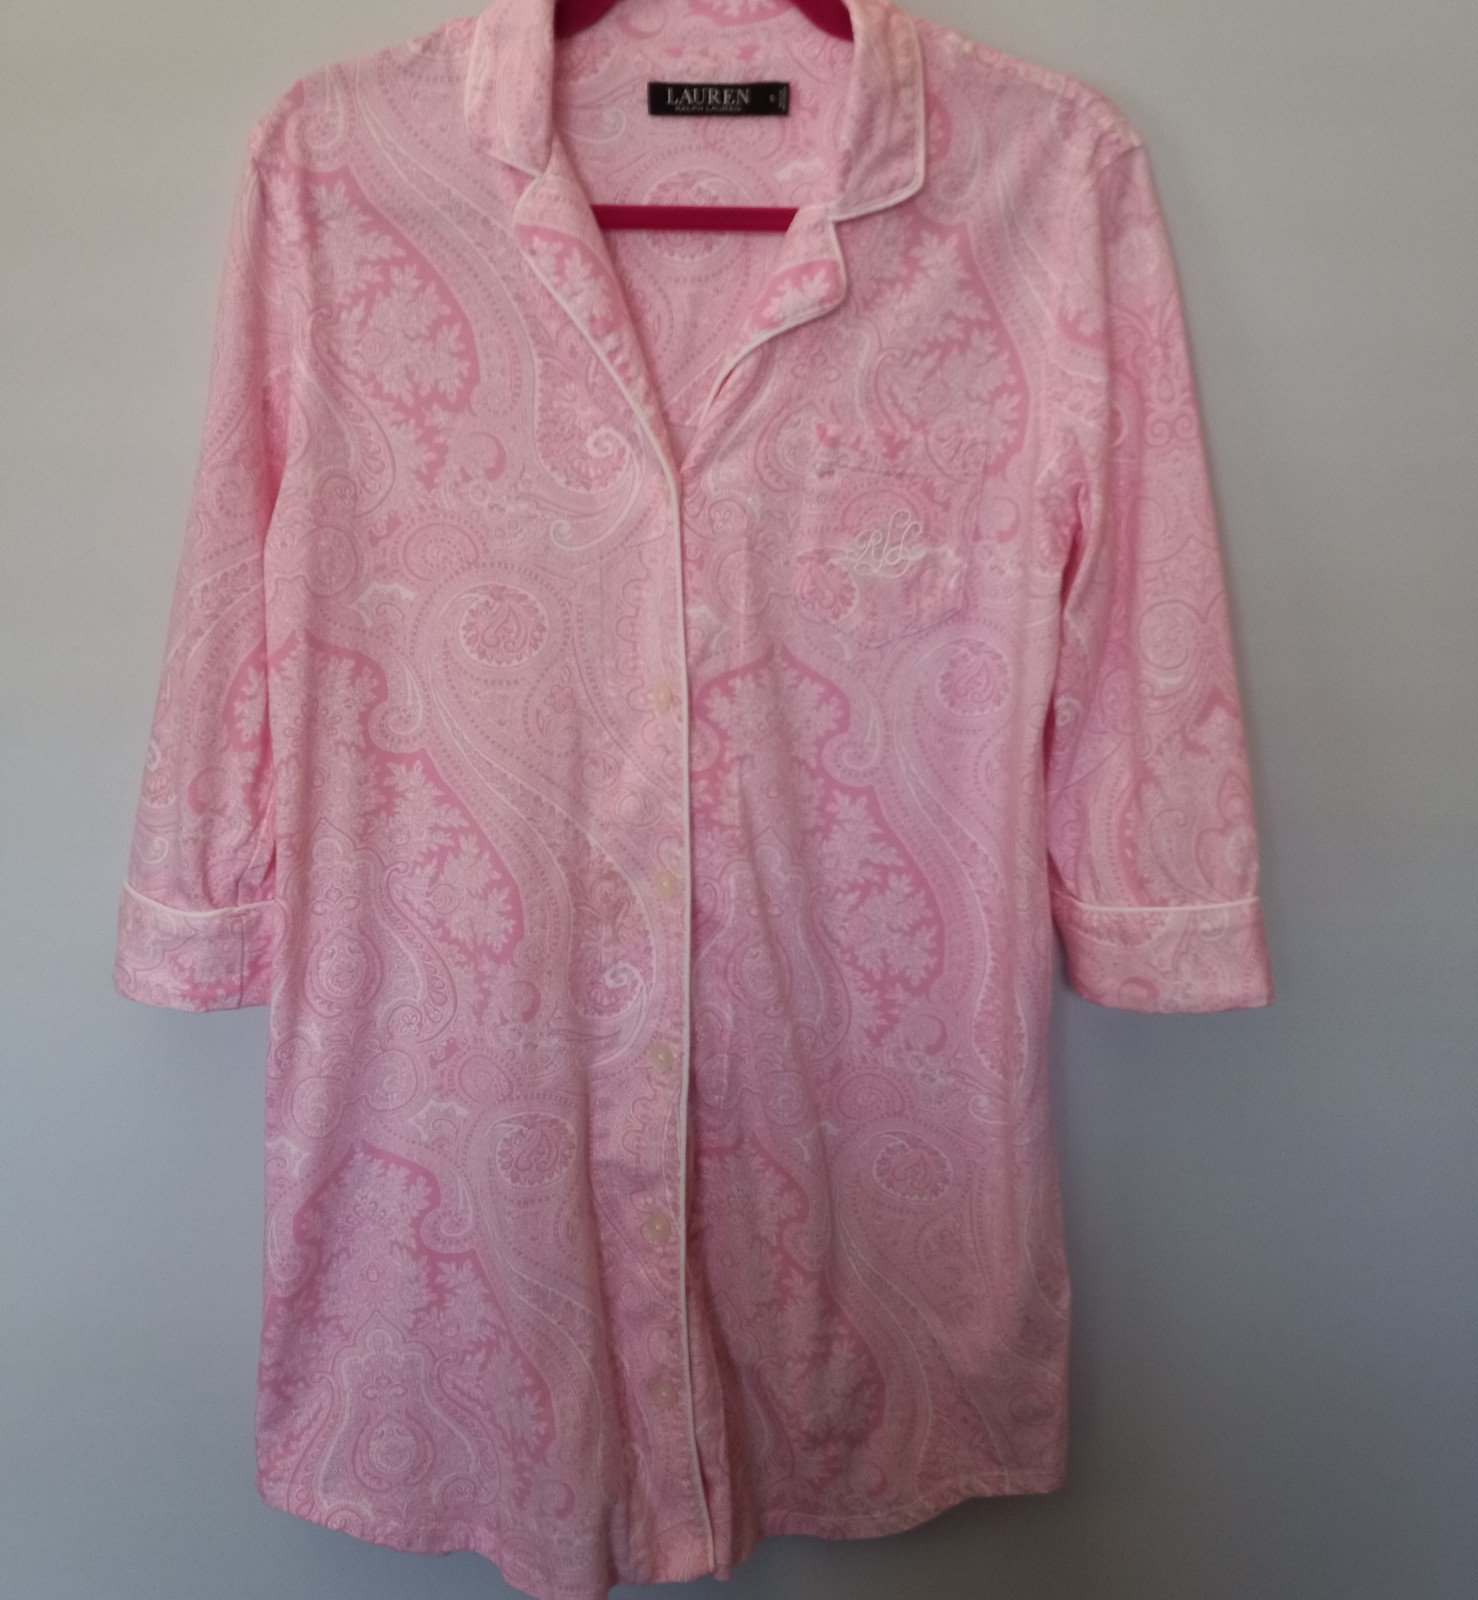 cheapest place to buy  Ralph Lauren Pink Paisley Sleep Shirt jhNrYFDHV best sale